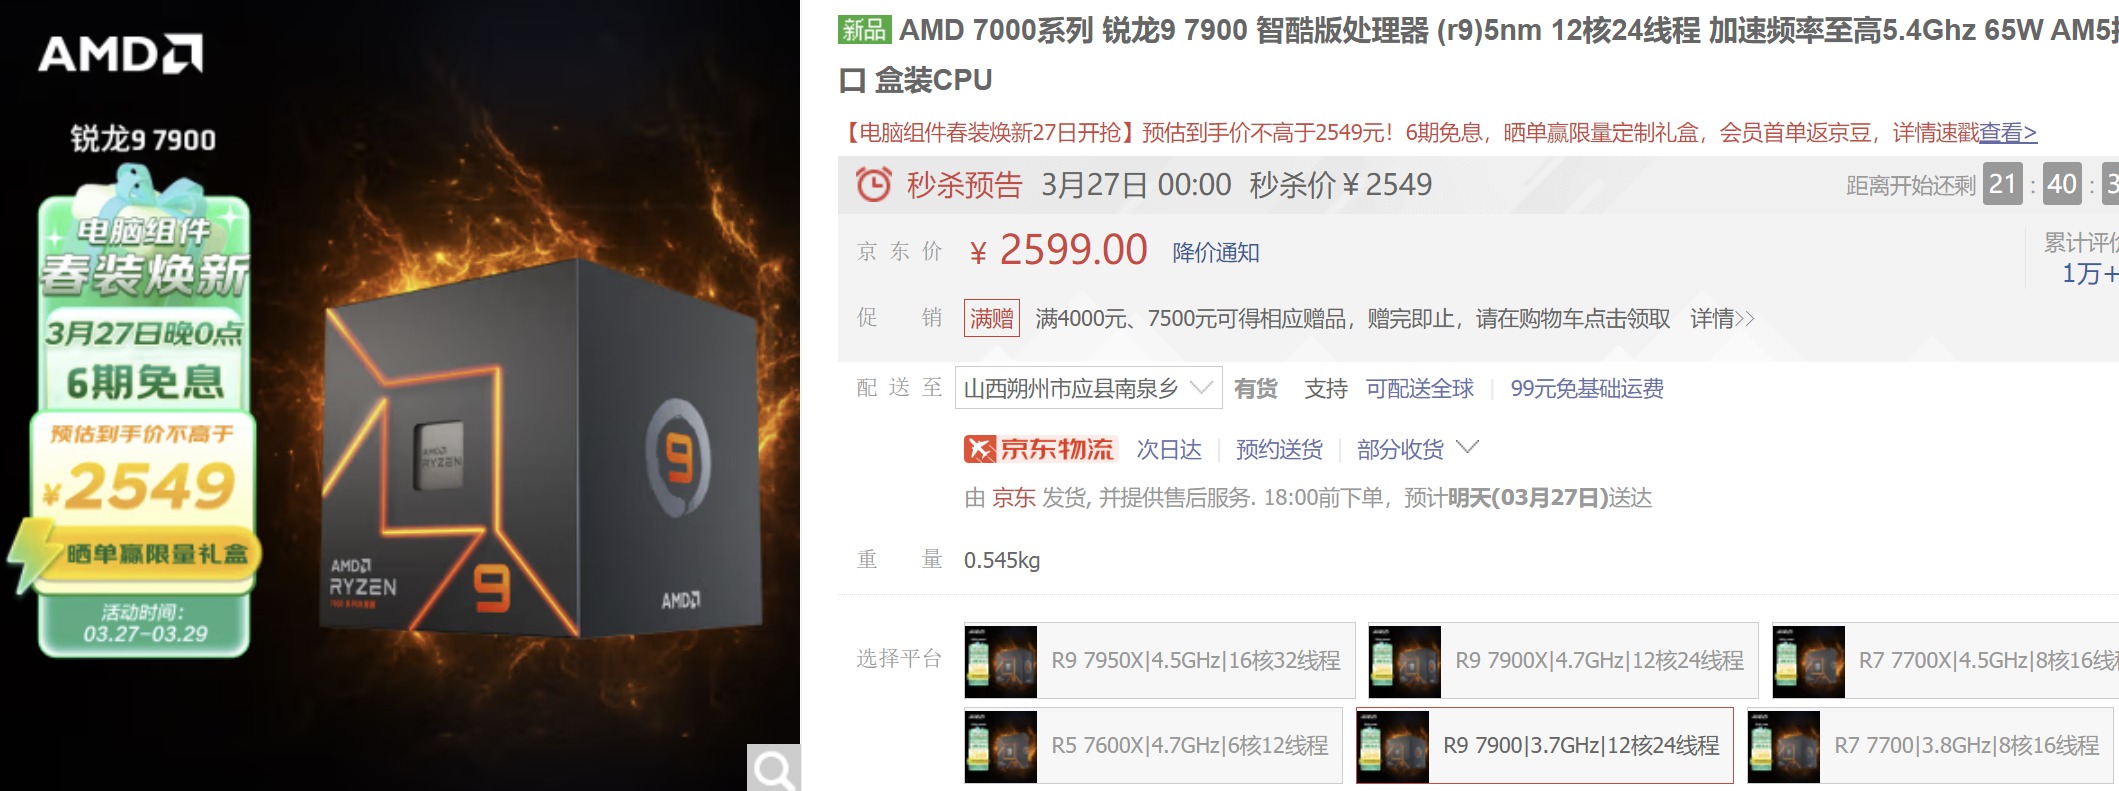 amd 7900 china promo เอเอ็มดีลดราคาซีพียู AMD Ryzen 7900/7700/7600 รุ่น non X ราคาต่ำกว่า MSRP เฉพาะในฝั่งประเทศจีน 